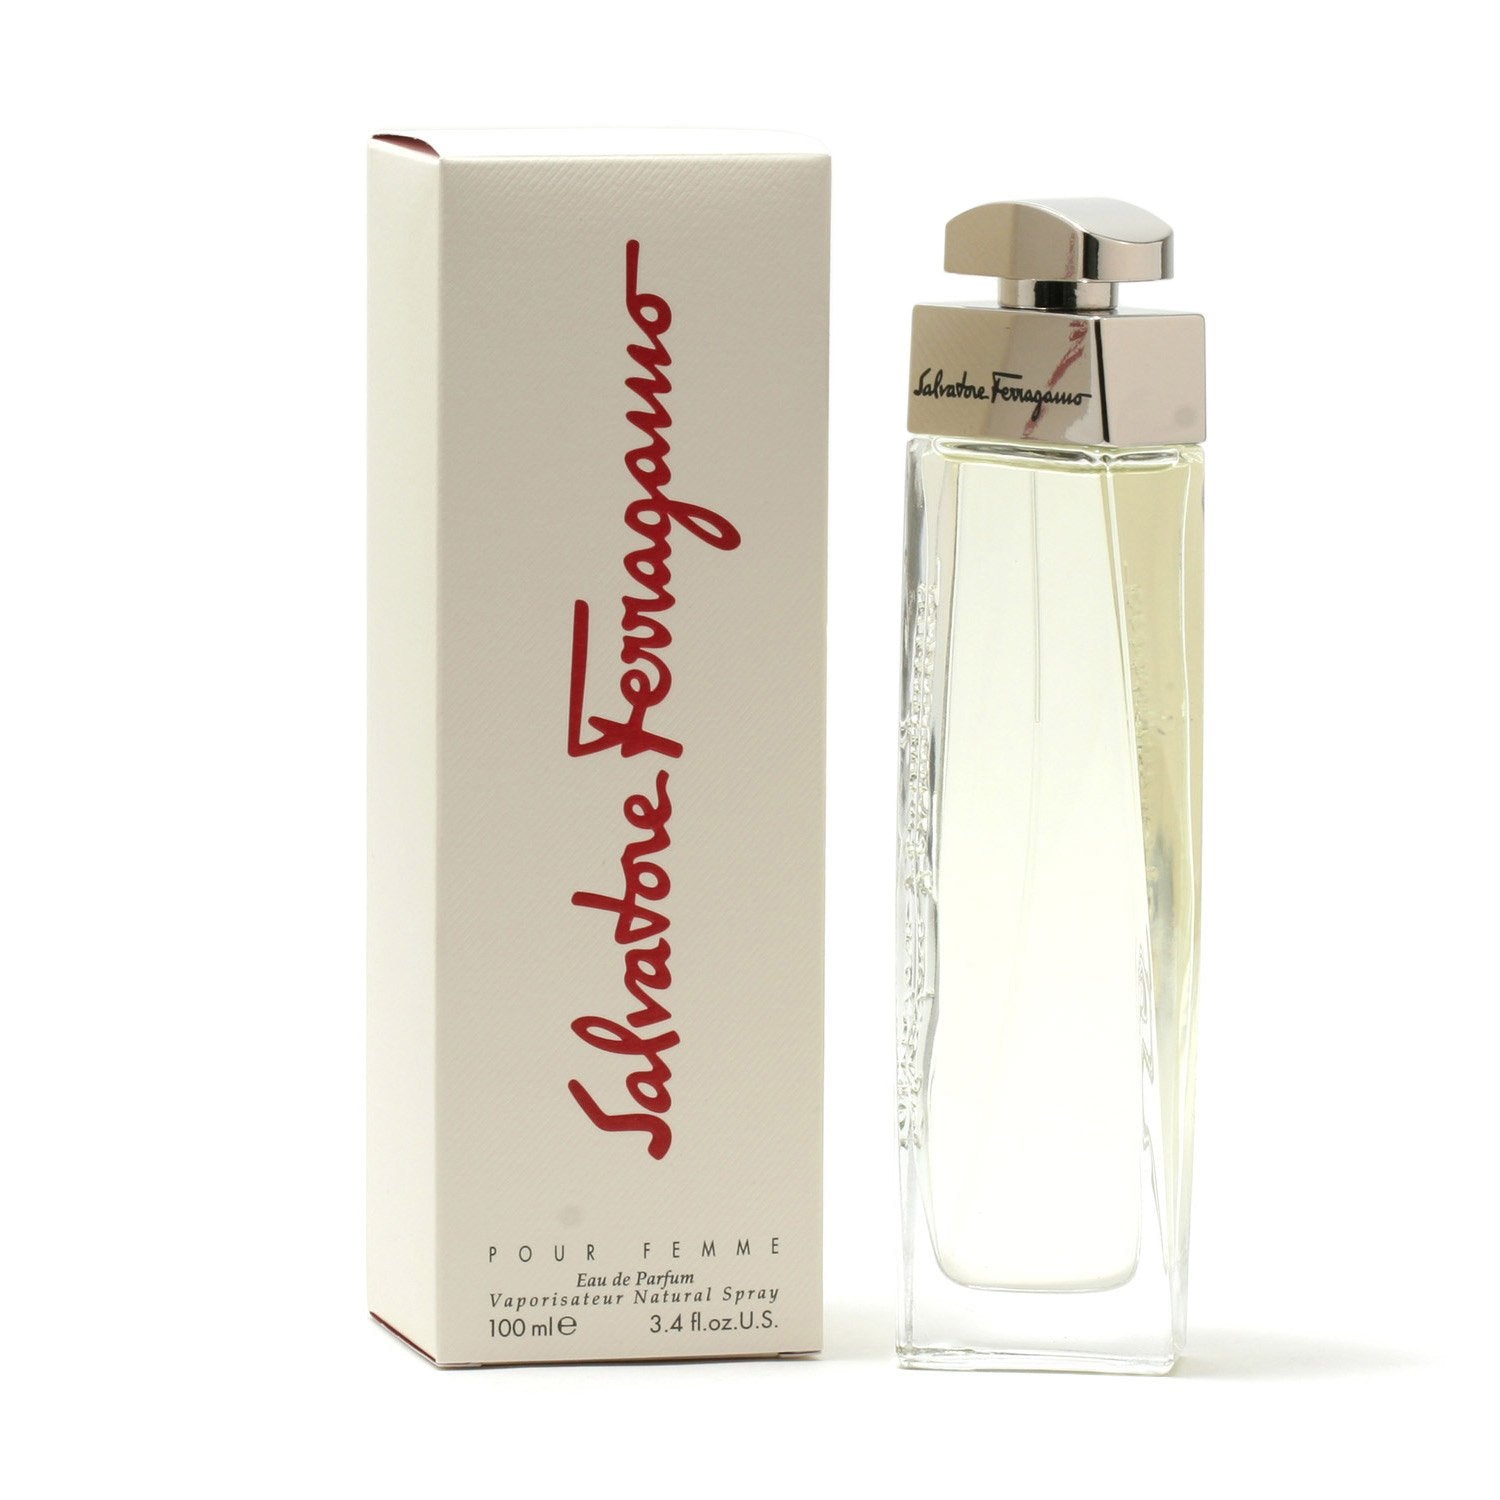 Perfume - SALVATORE FERRAGAMO POUR FEMME - EAU DE PARFUM SPRAY, 3.4 OZ